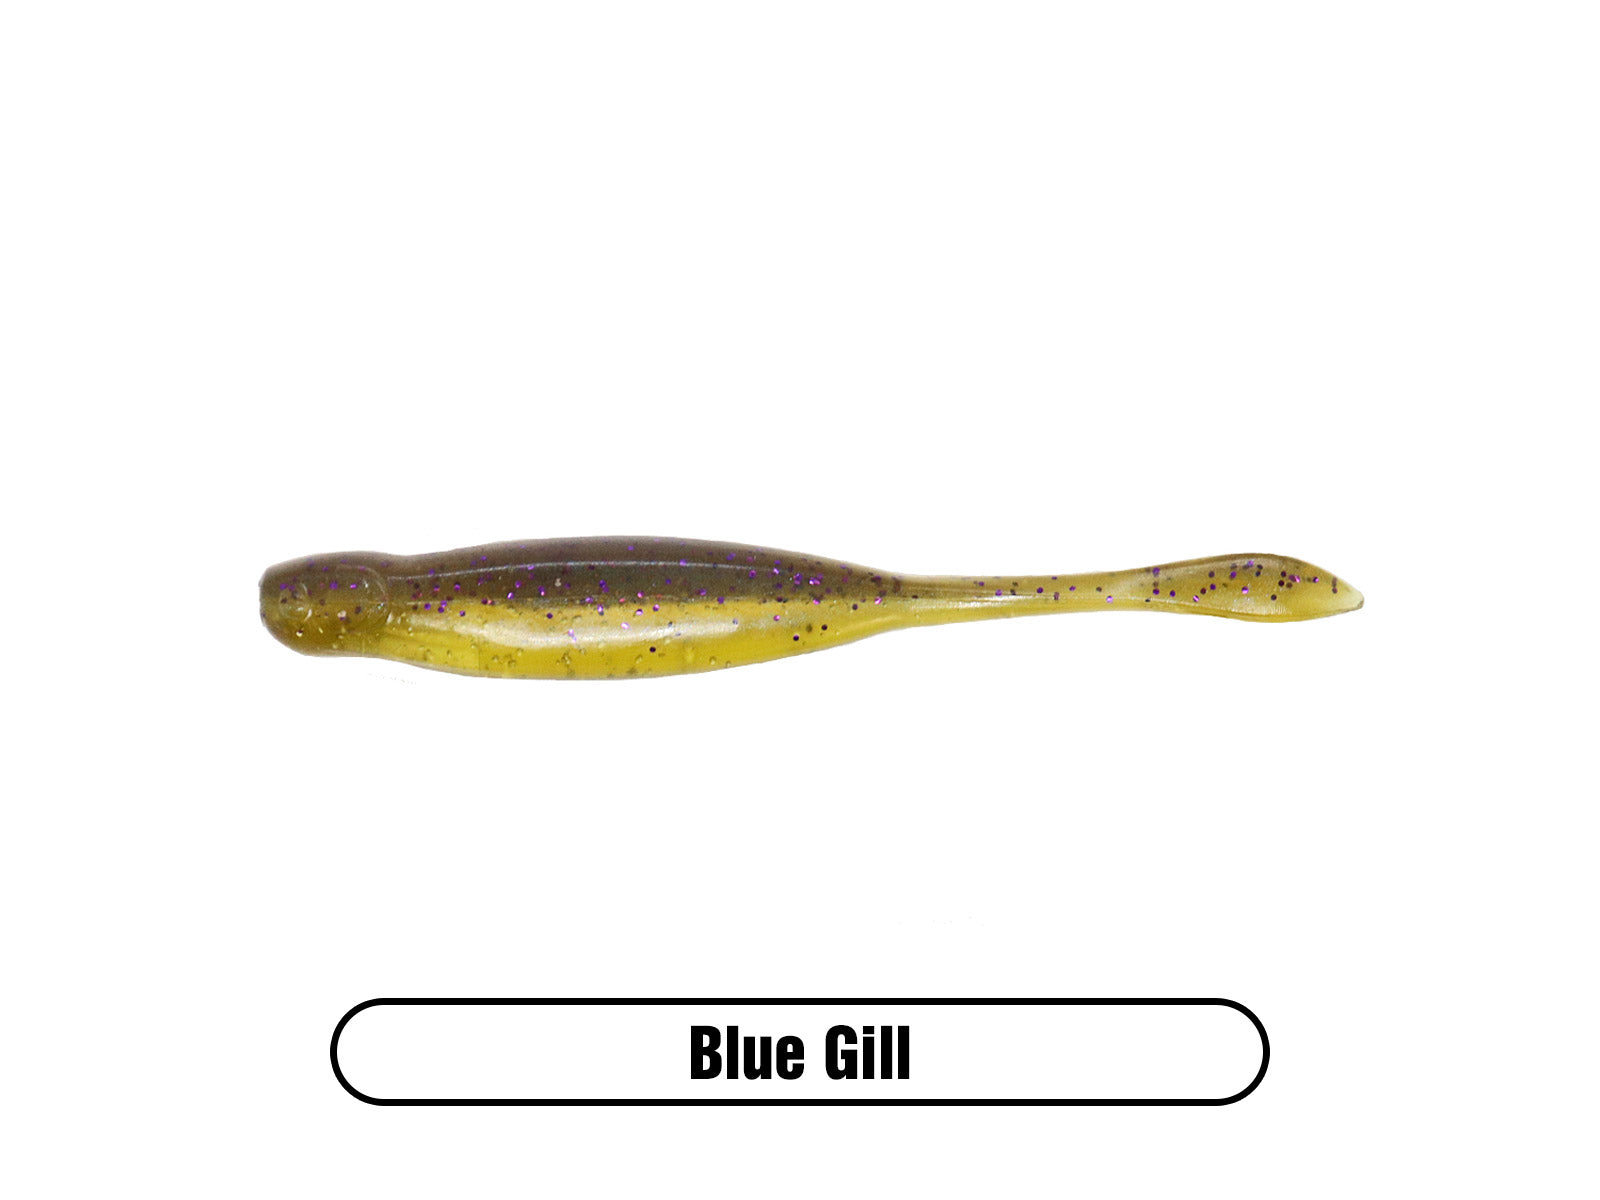 18cm 24g big long fish Minnow sea fishing lure bait 3D eyes Strong hooks  lur F❤❤